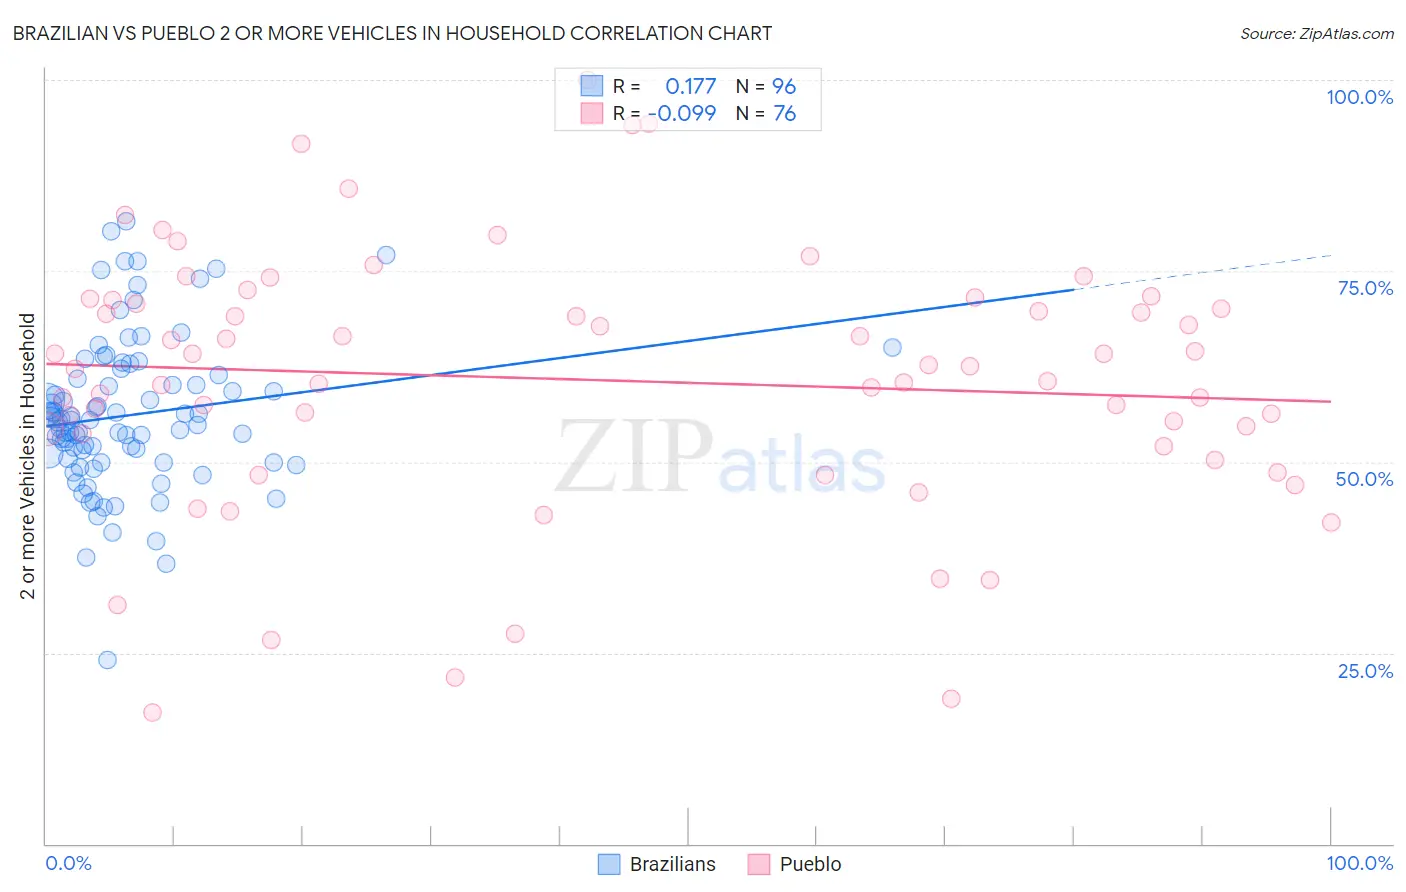 Brazilian vs Pueblo 2 or more Vehicles in Household